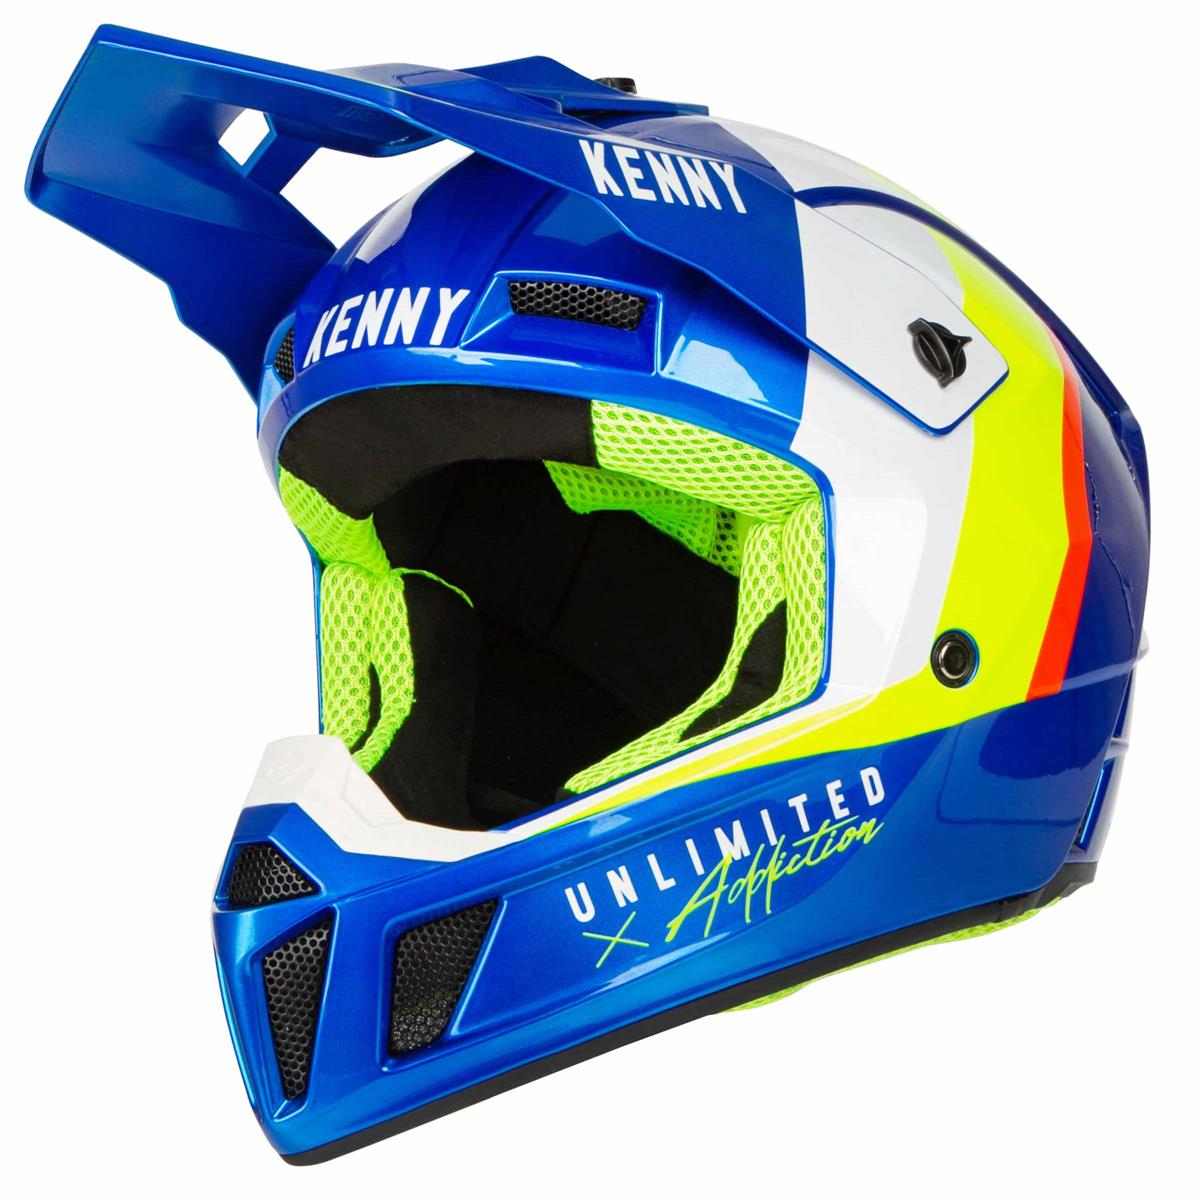 verkiezing Worden Schipbreuk Kenny MX Helmet Performance Graphic Candy - Blue | Maciag Offroad